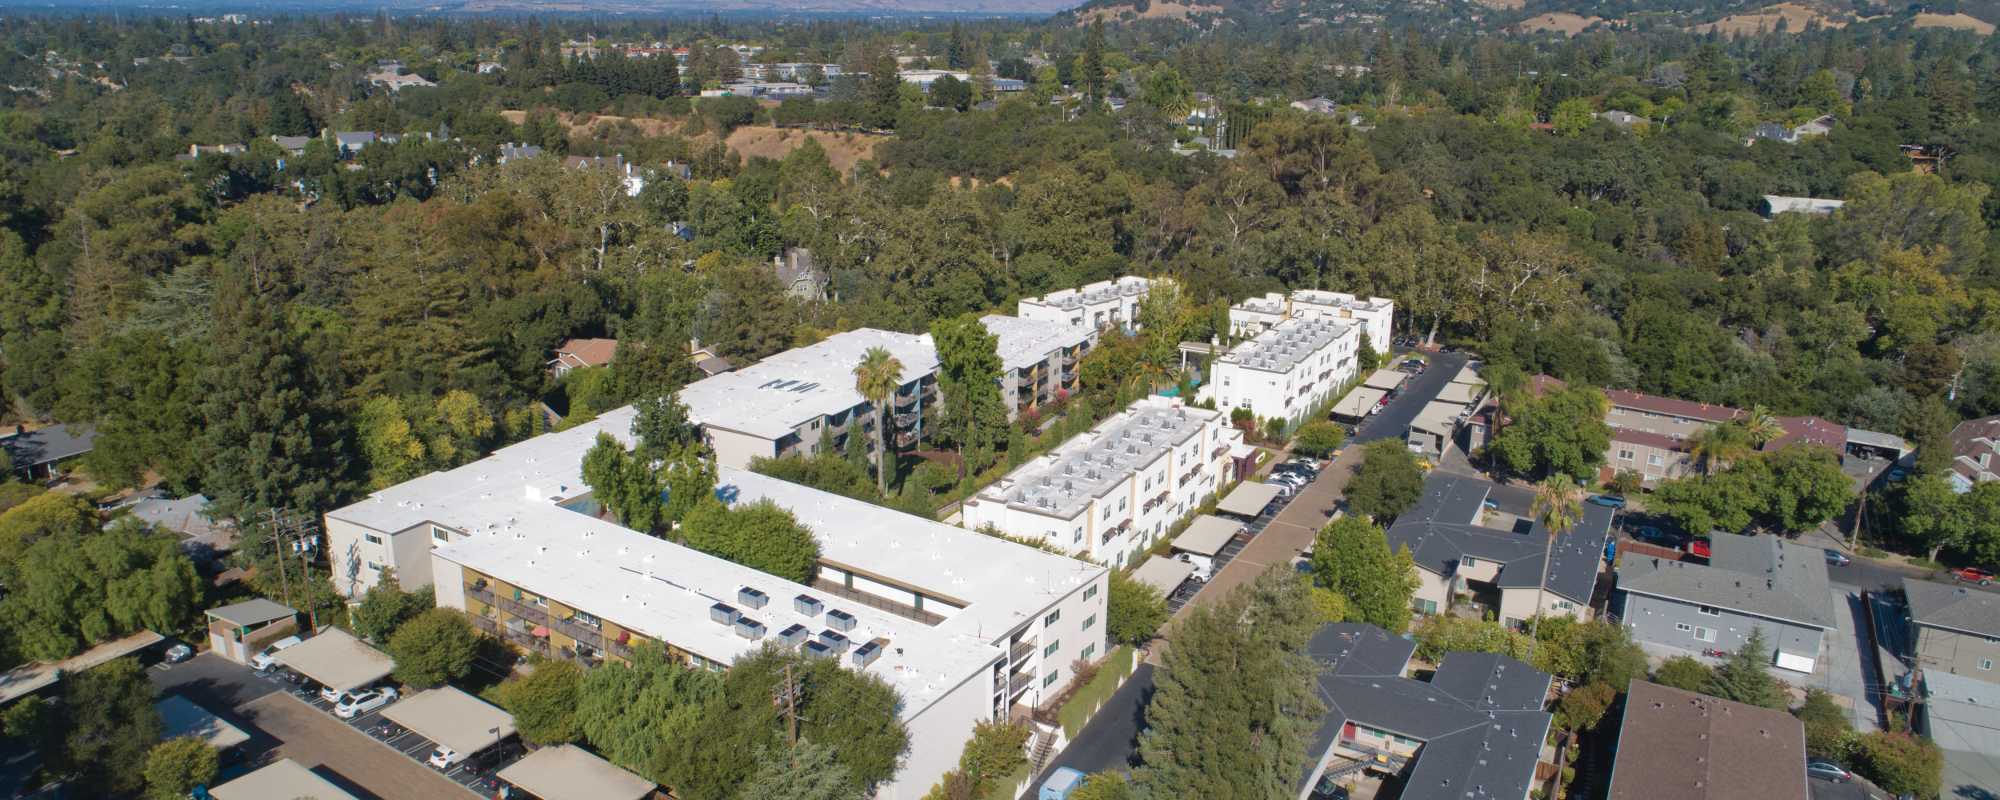 Apartments at Vivere in Los Gatos, California